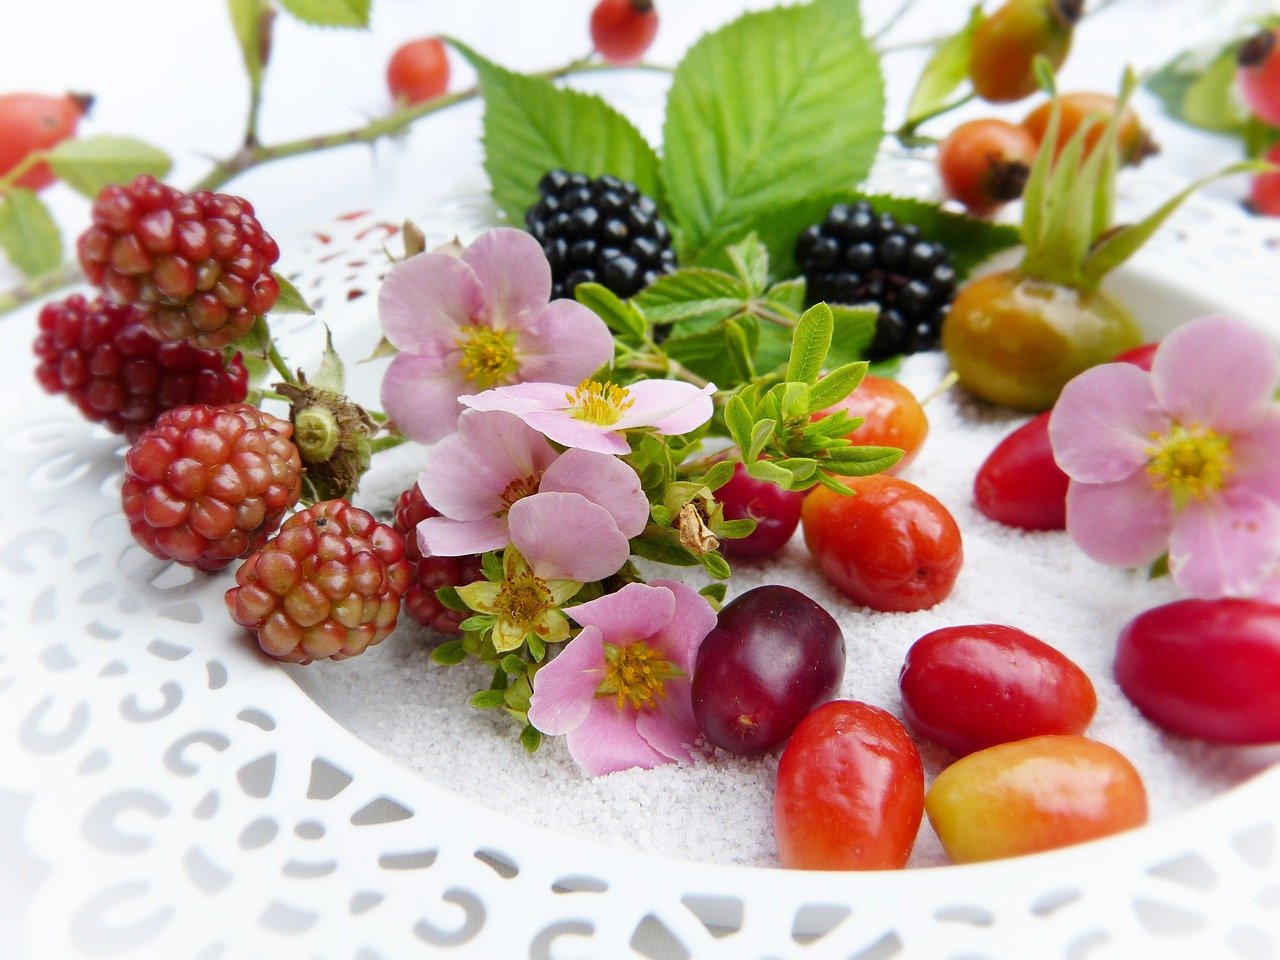 Bild: berries-2665250_1280 (Quelle: pixabay.com)